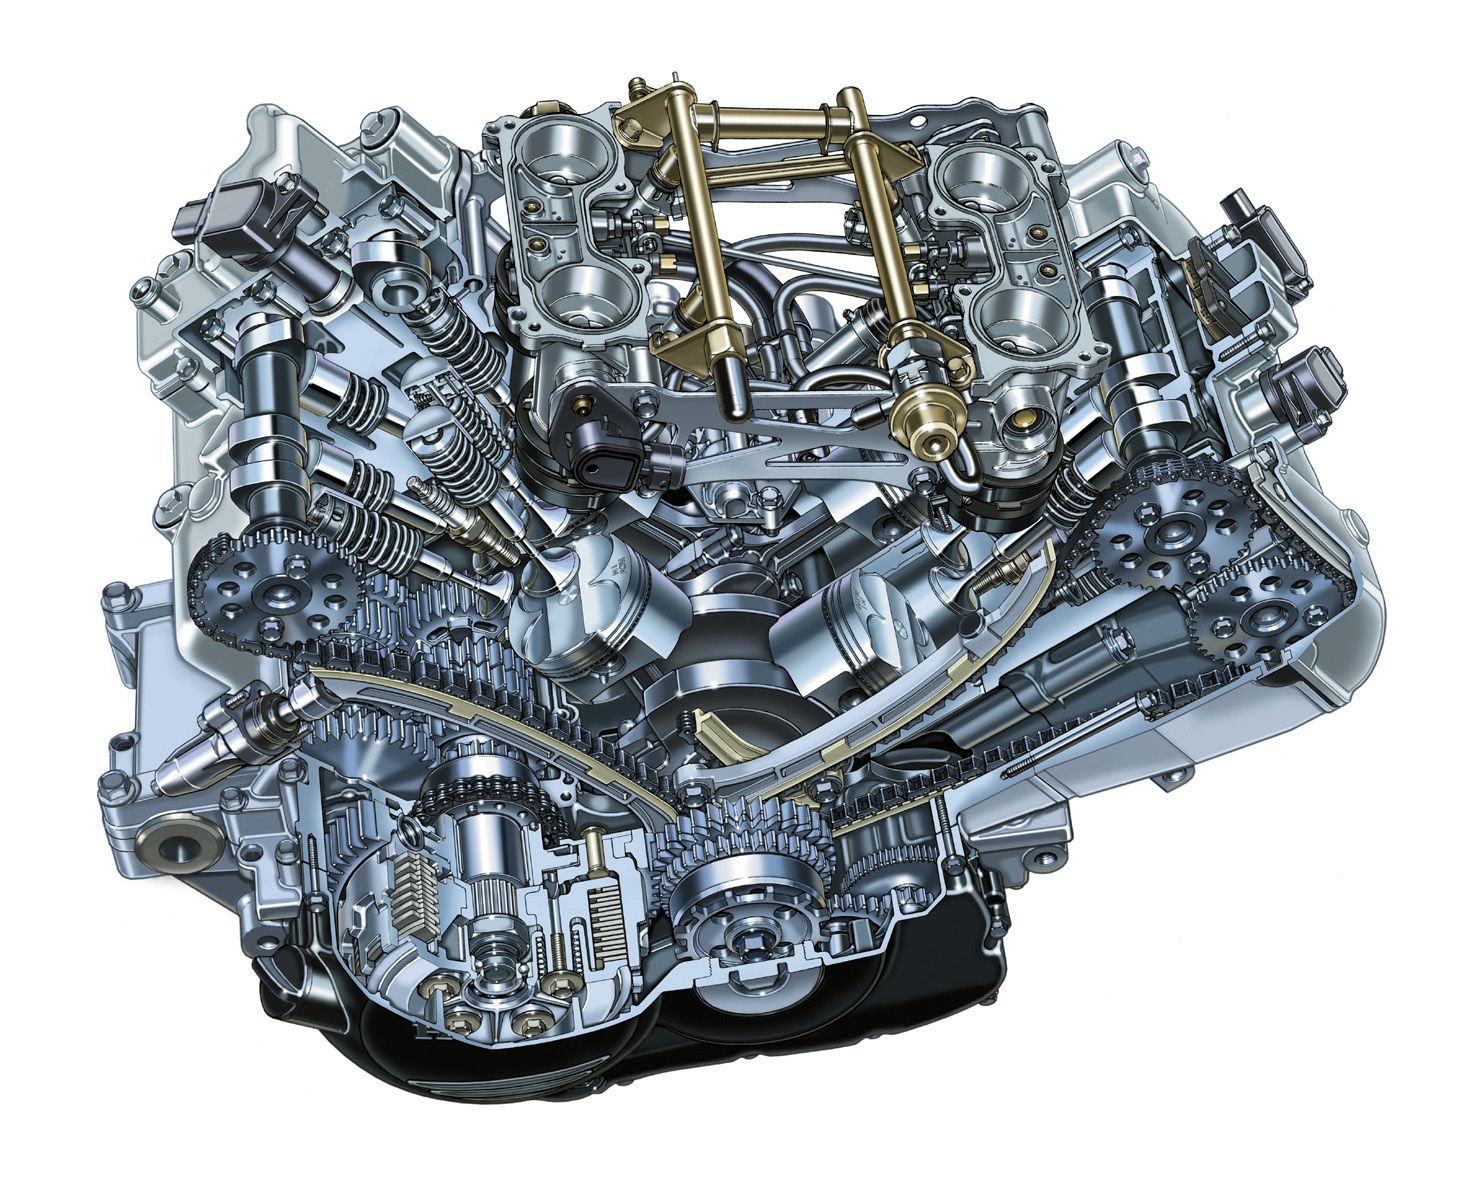  2002 Honda VFR800F Engine